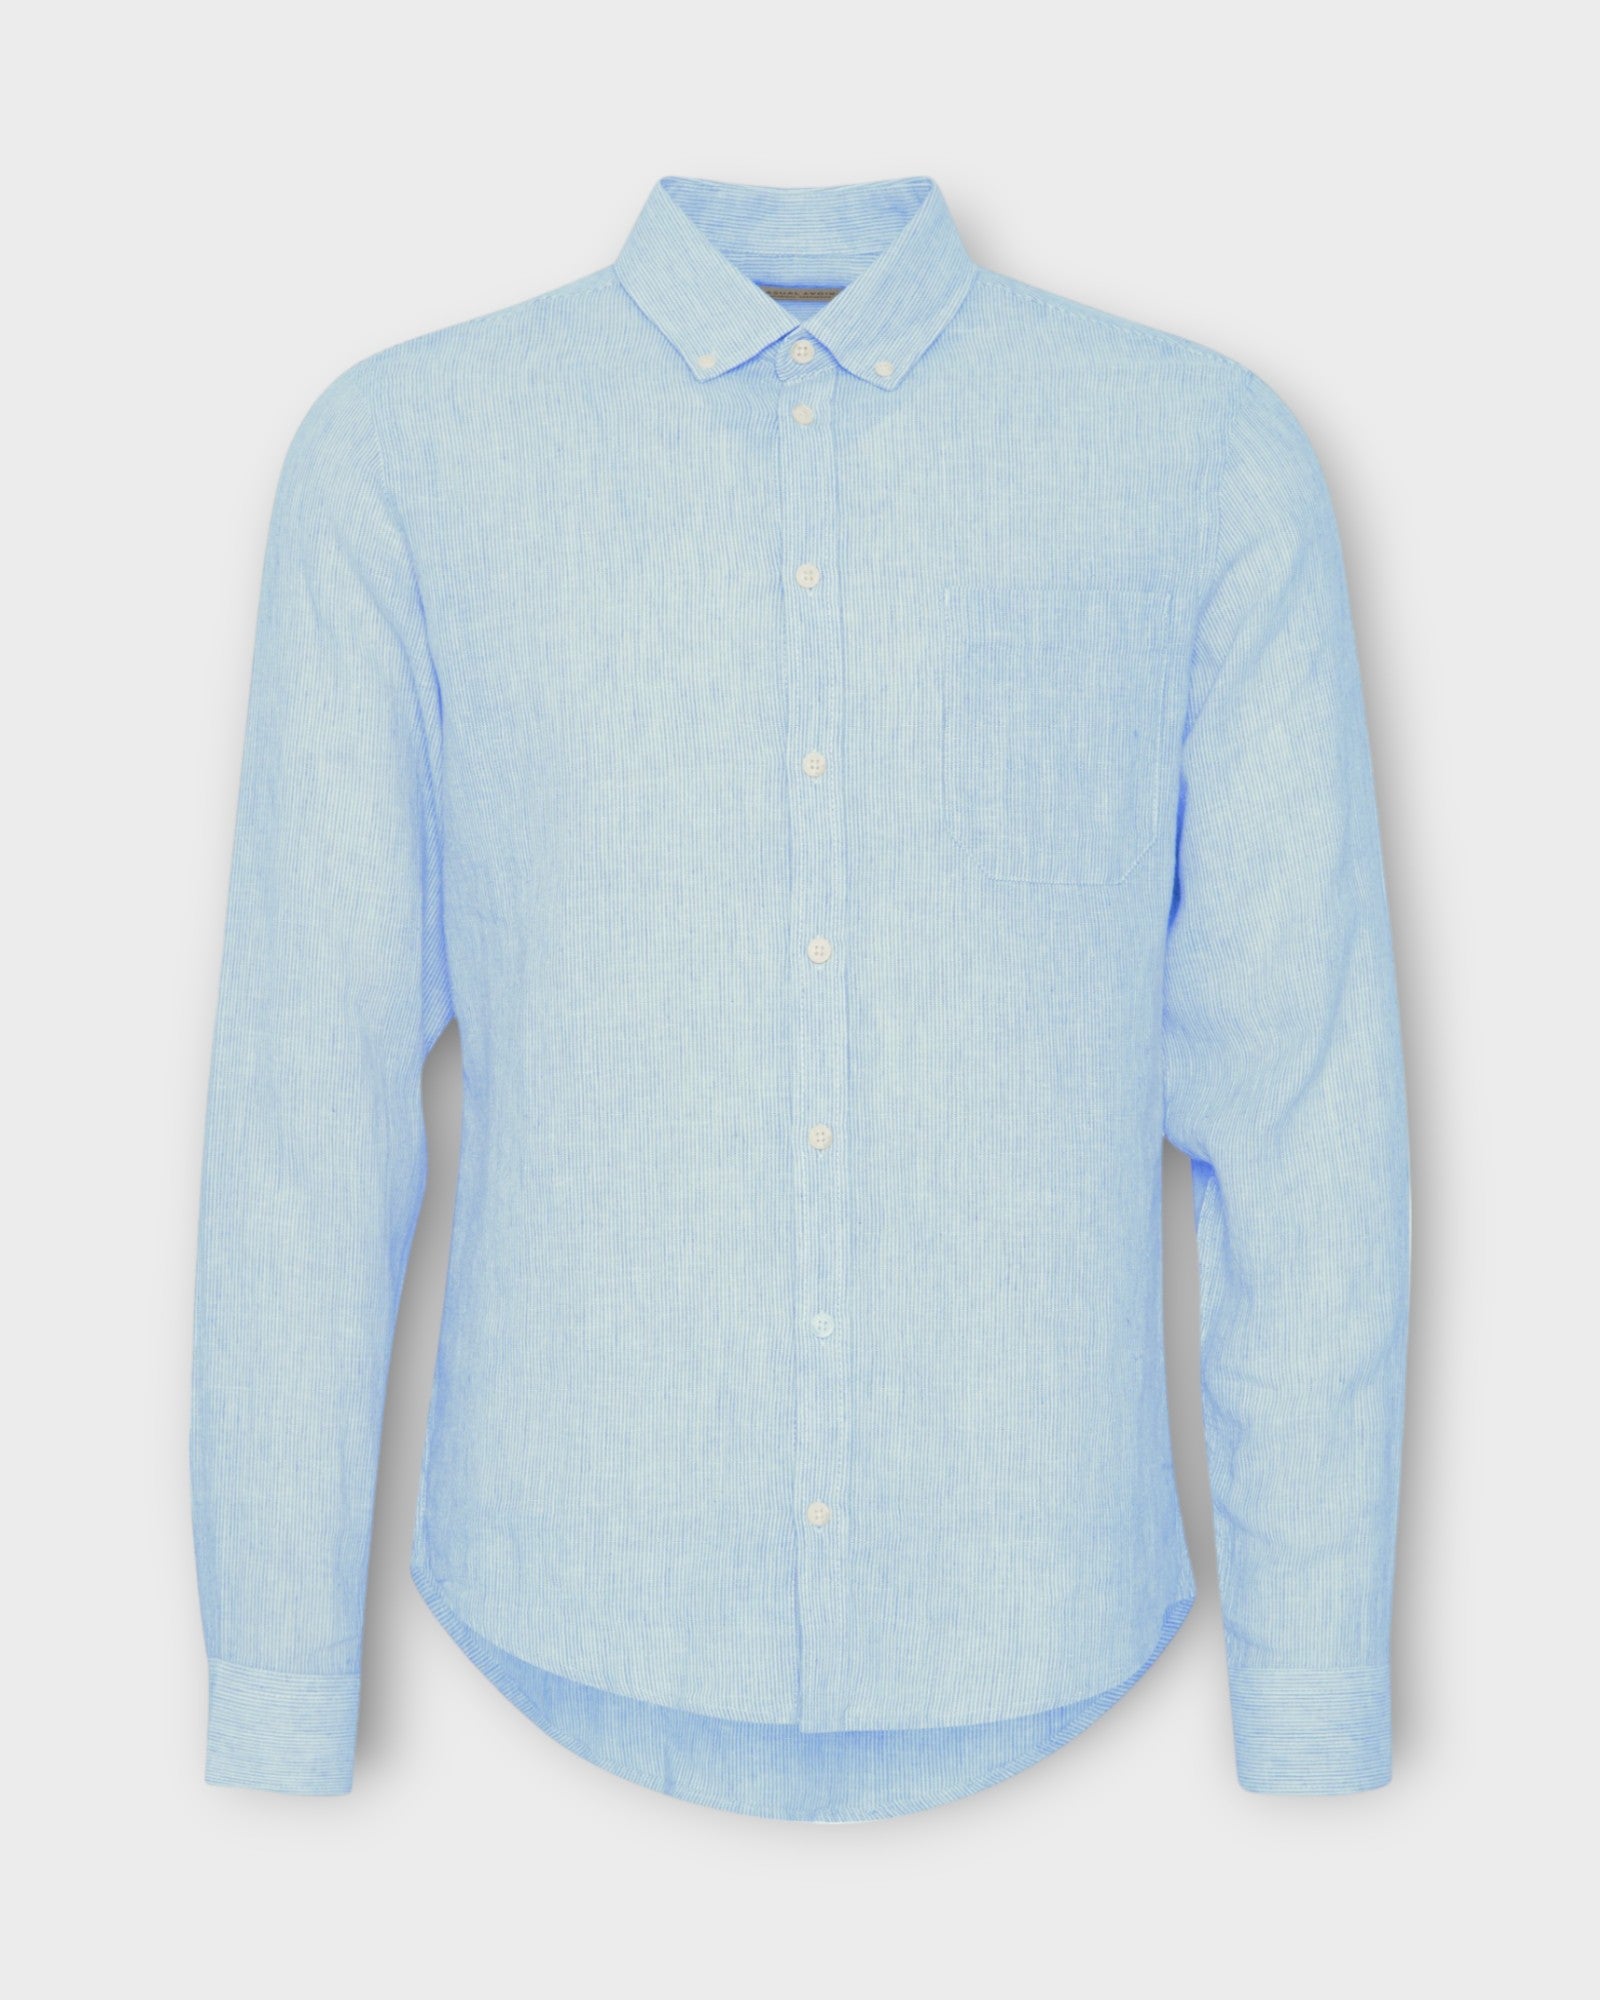 Anton Ls Striped Linen Mix Shirt  Chambray Blue, langærmet hørskjorte fra Casual Friday. Her set forfra.